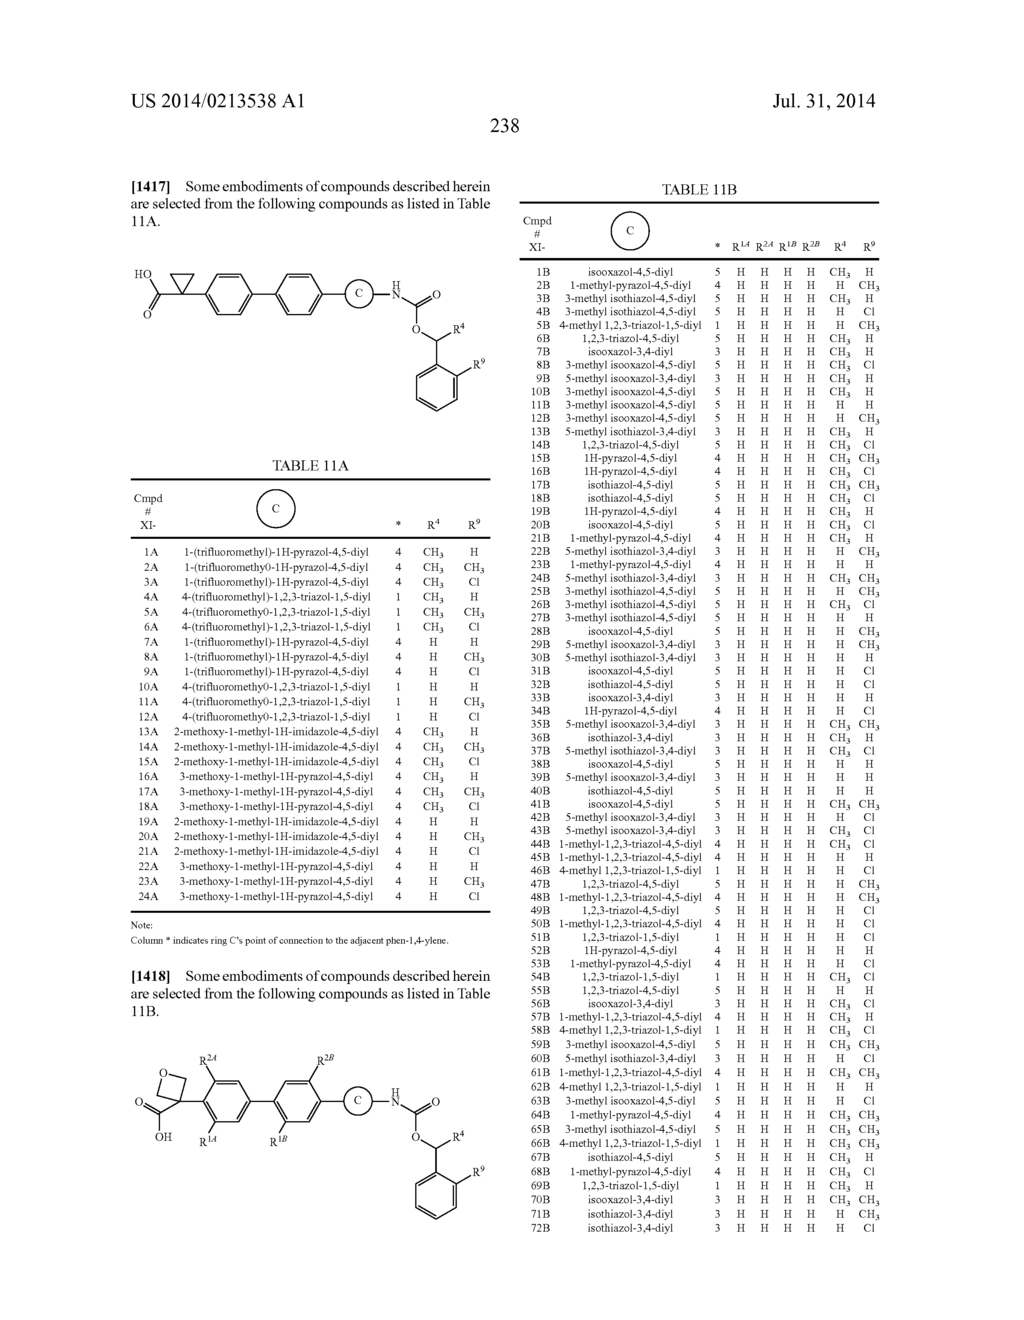 LYSOPHOSPHATIDIC ACID RECEPTOR ANTAGONISTS - diagram, schematic, and image 239